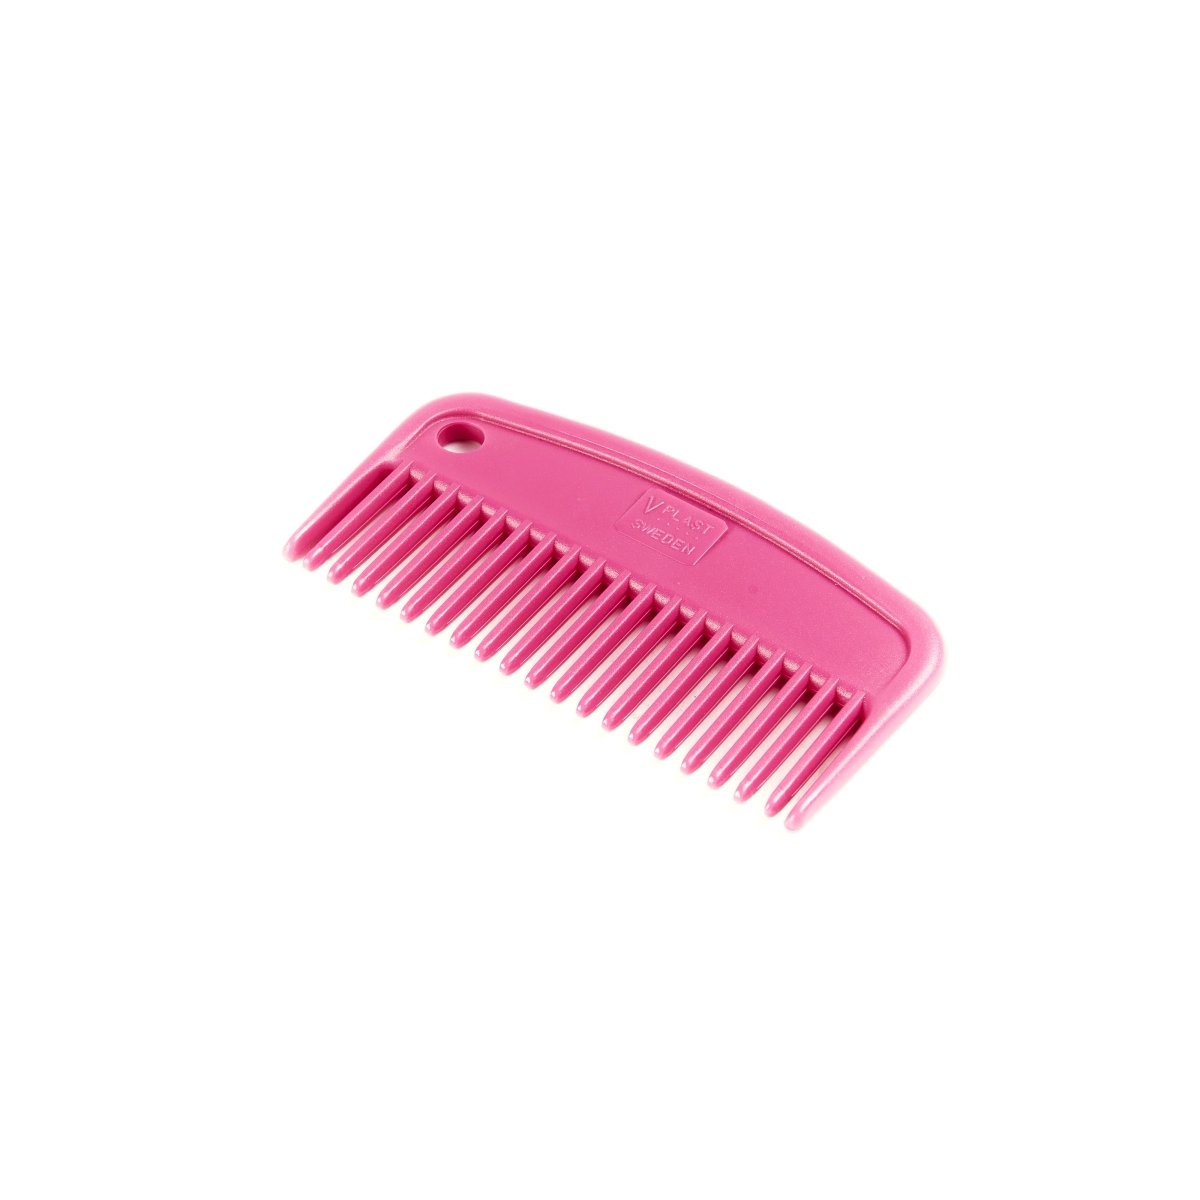 EZI-GROOM Plastic Mane Comb - Small - Pink -